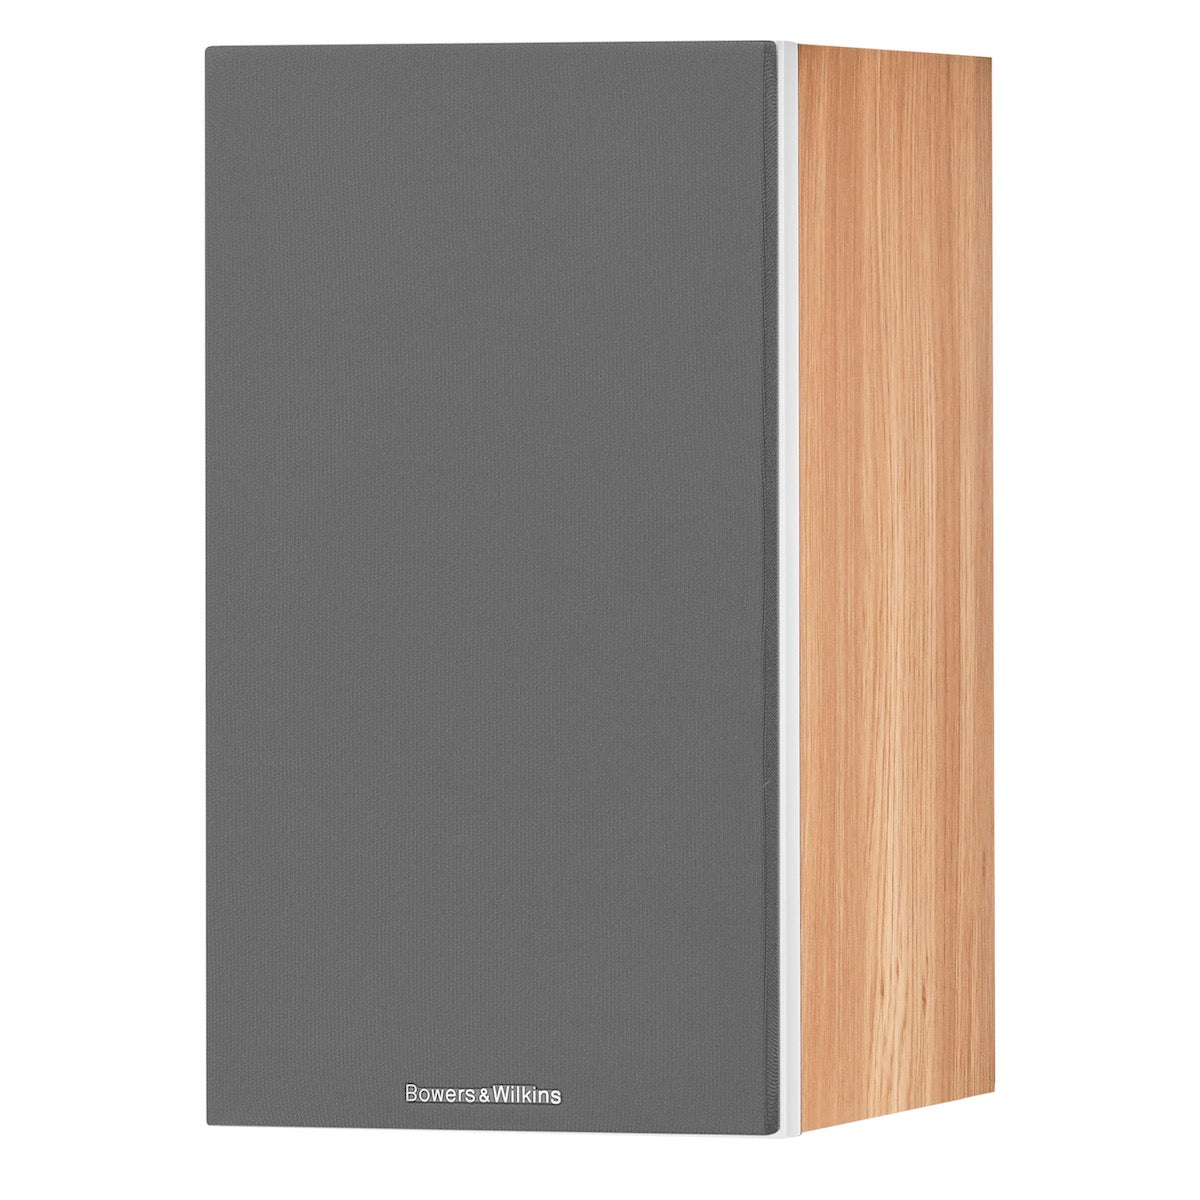 Bowers & Wilkins 607 S2 Anniversary Edition (Matte Black) Bookshelf  speakers at Crutchfield